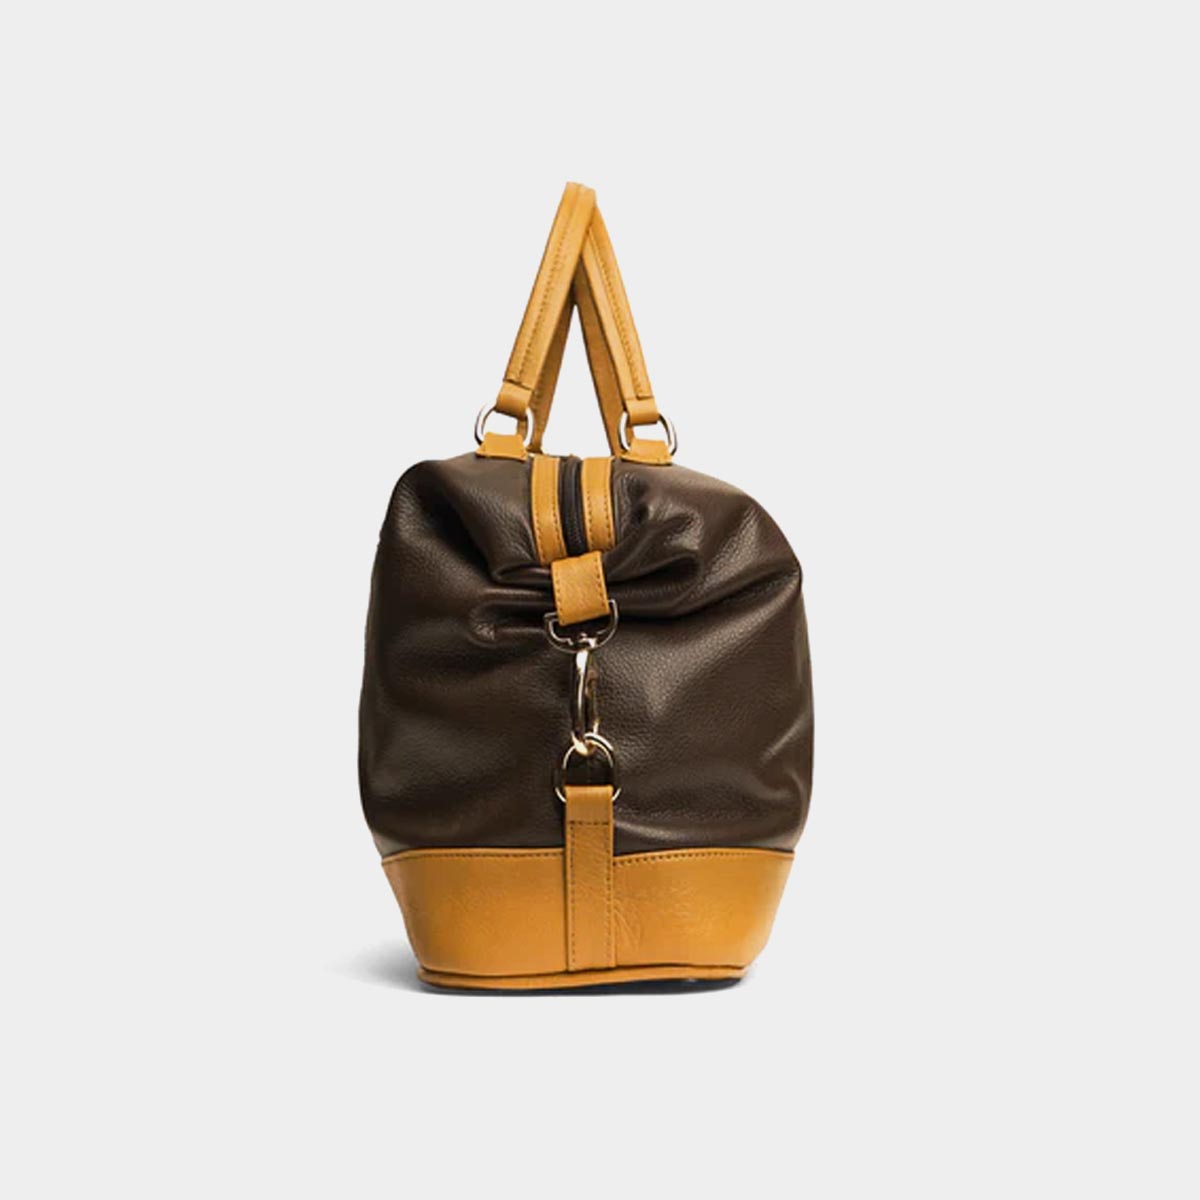 dark bown leather duffle bagTravel Duffle Bag, Gym Tote Bag (1)